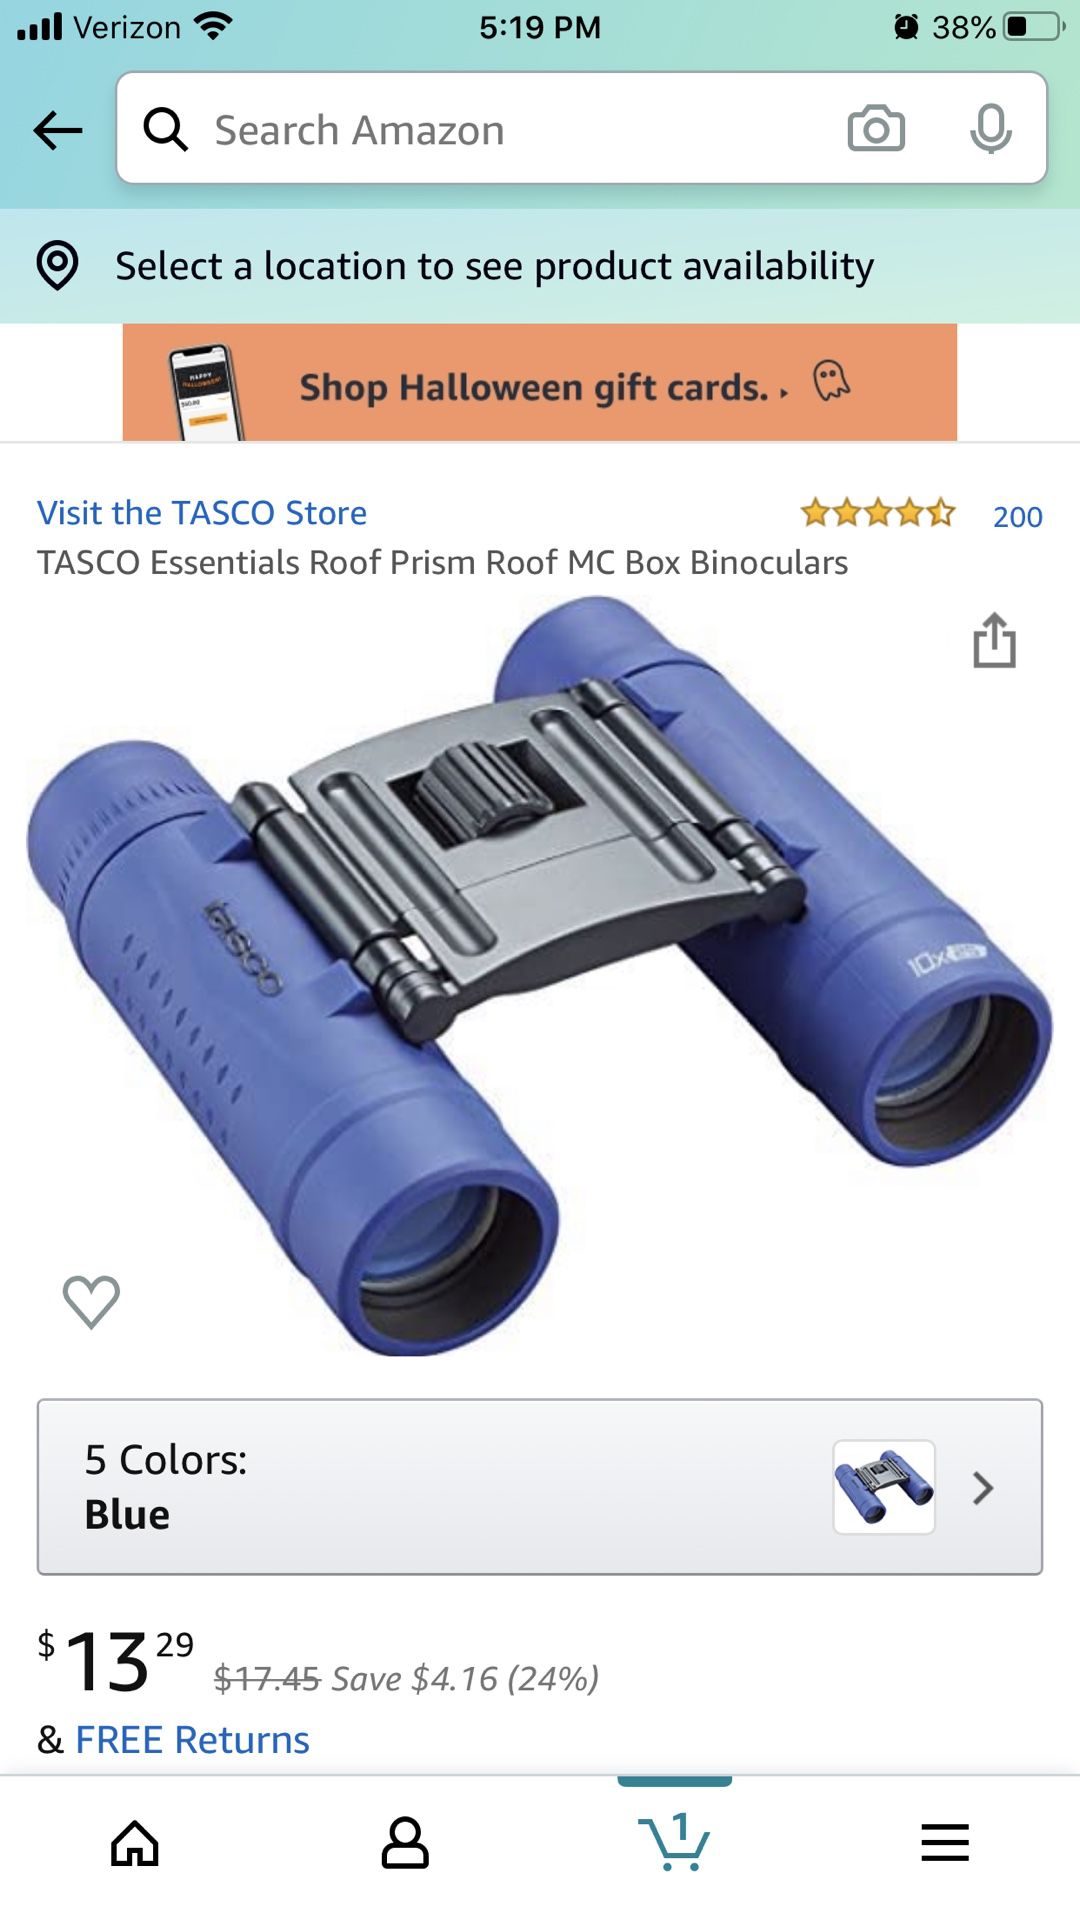 Tasco essentials roof prism roof MC box binoculars